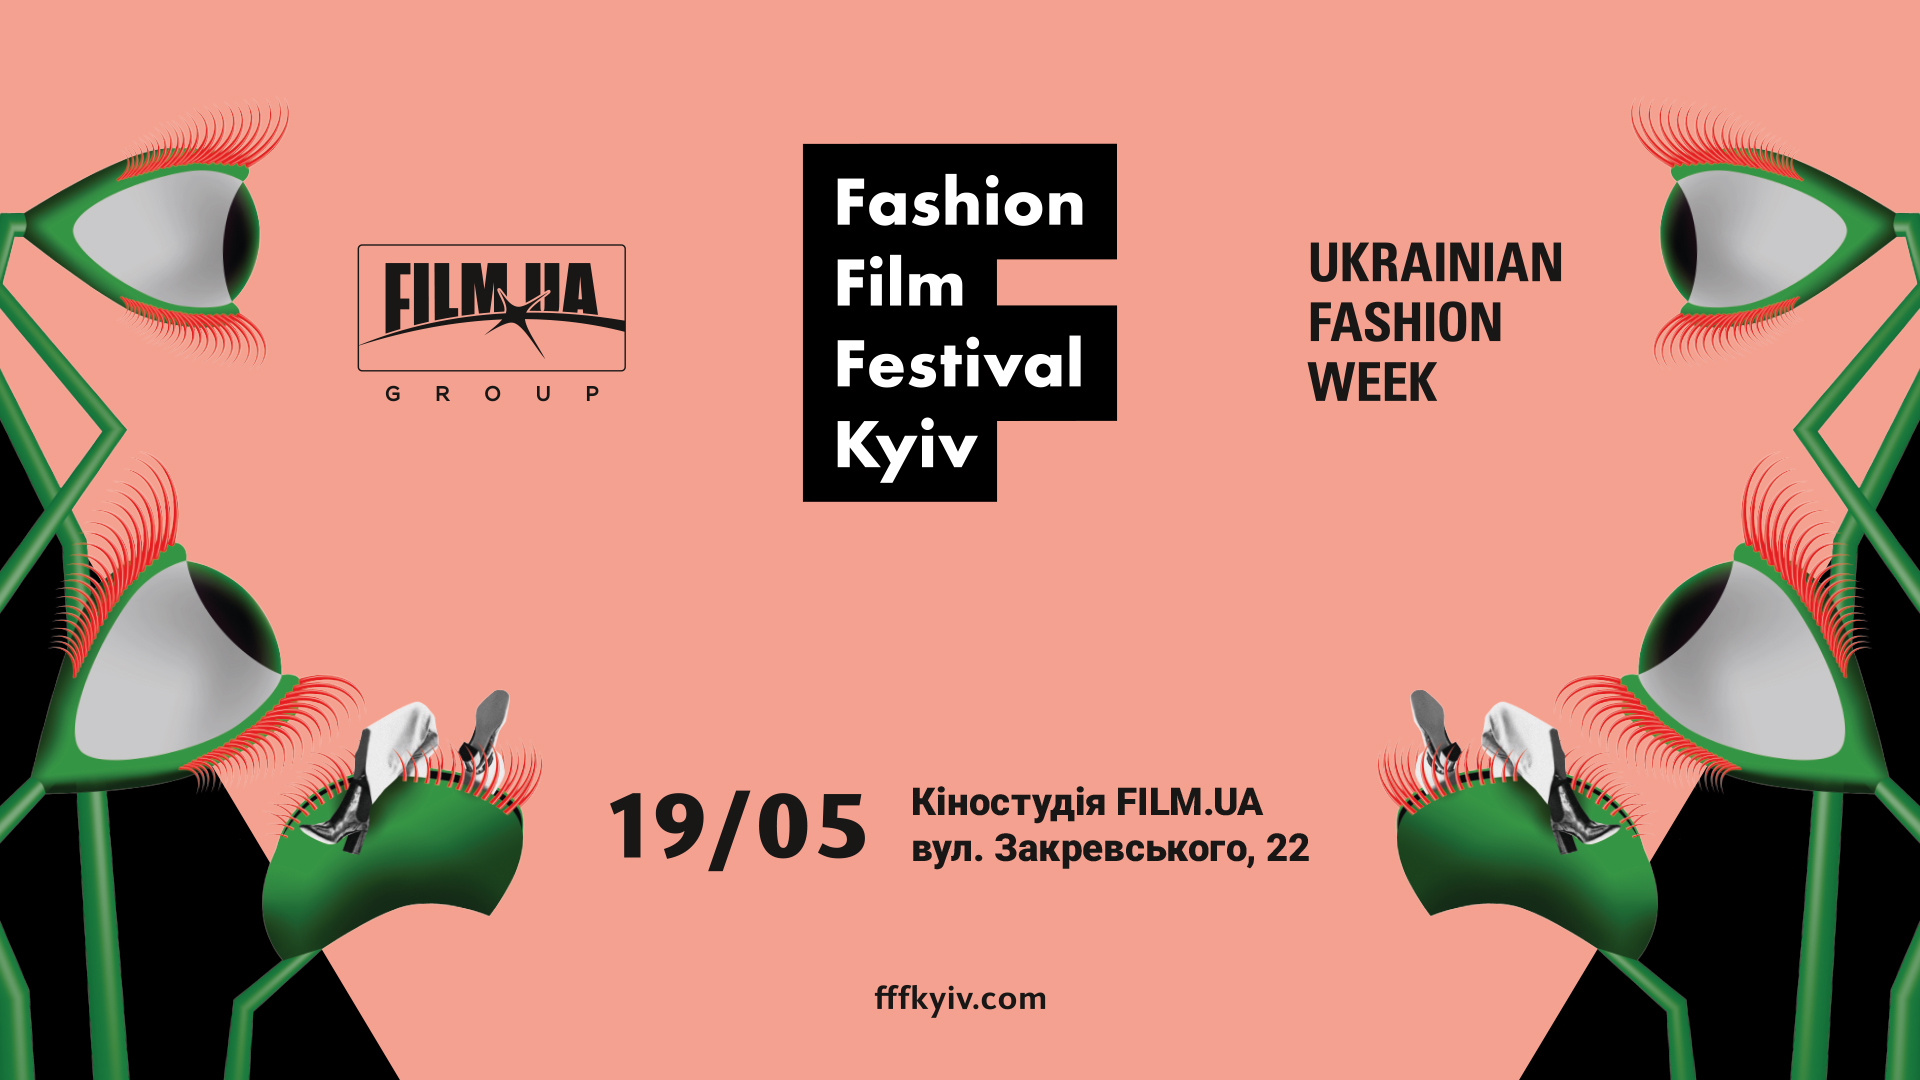 Оголошено програму Fashion Film Festival Kyiv